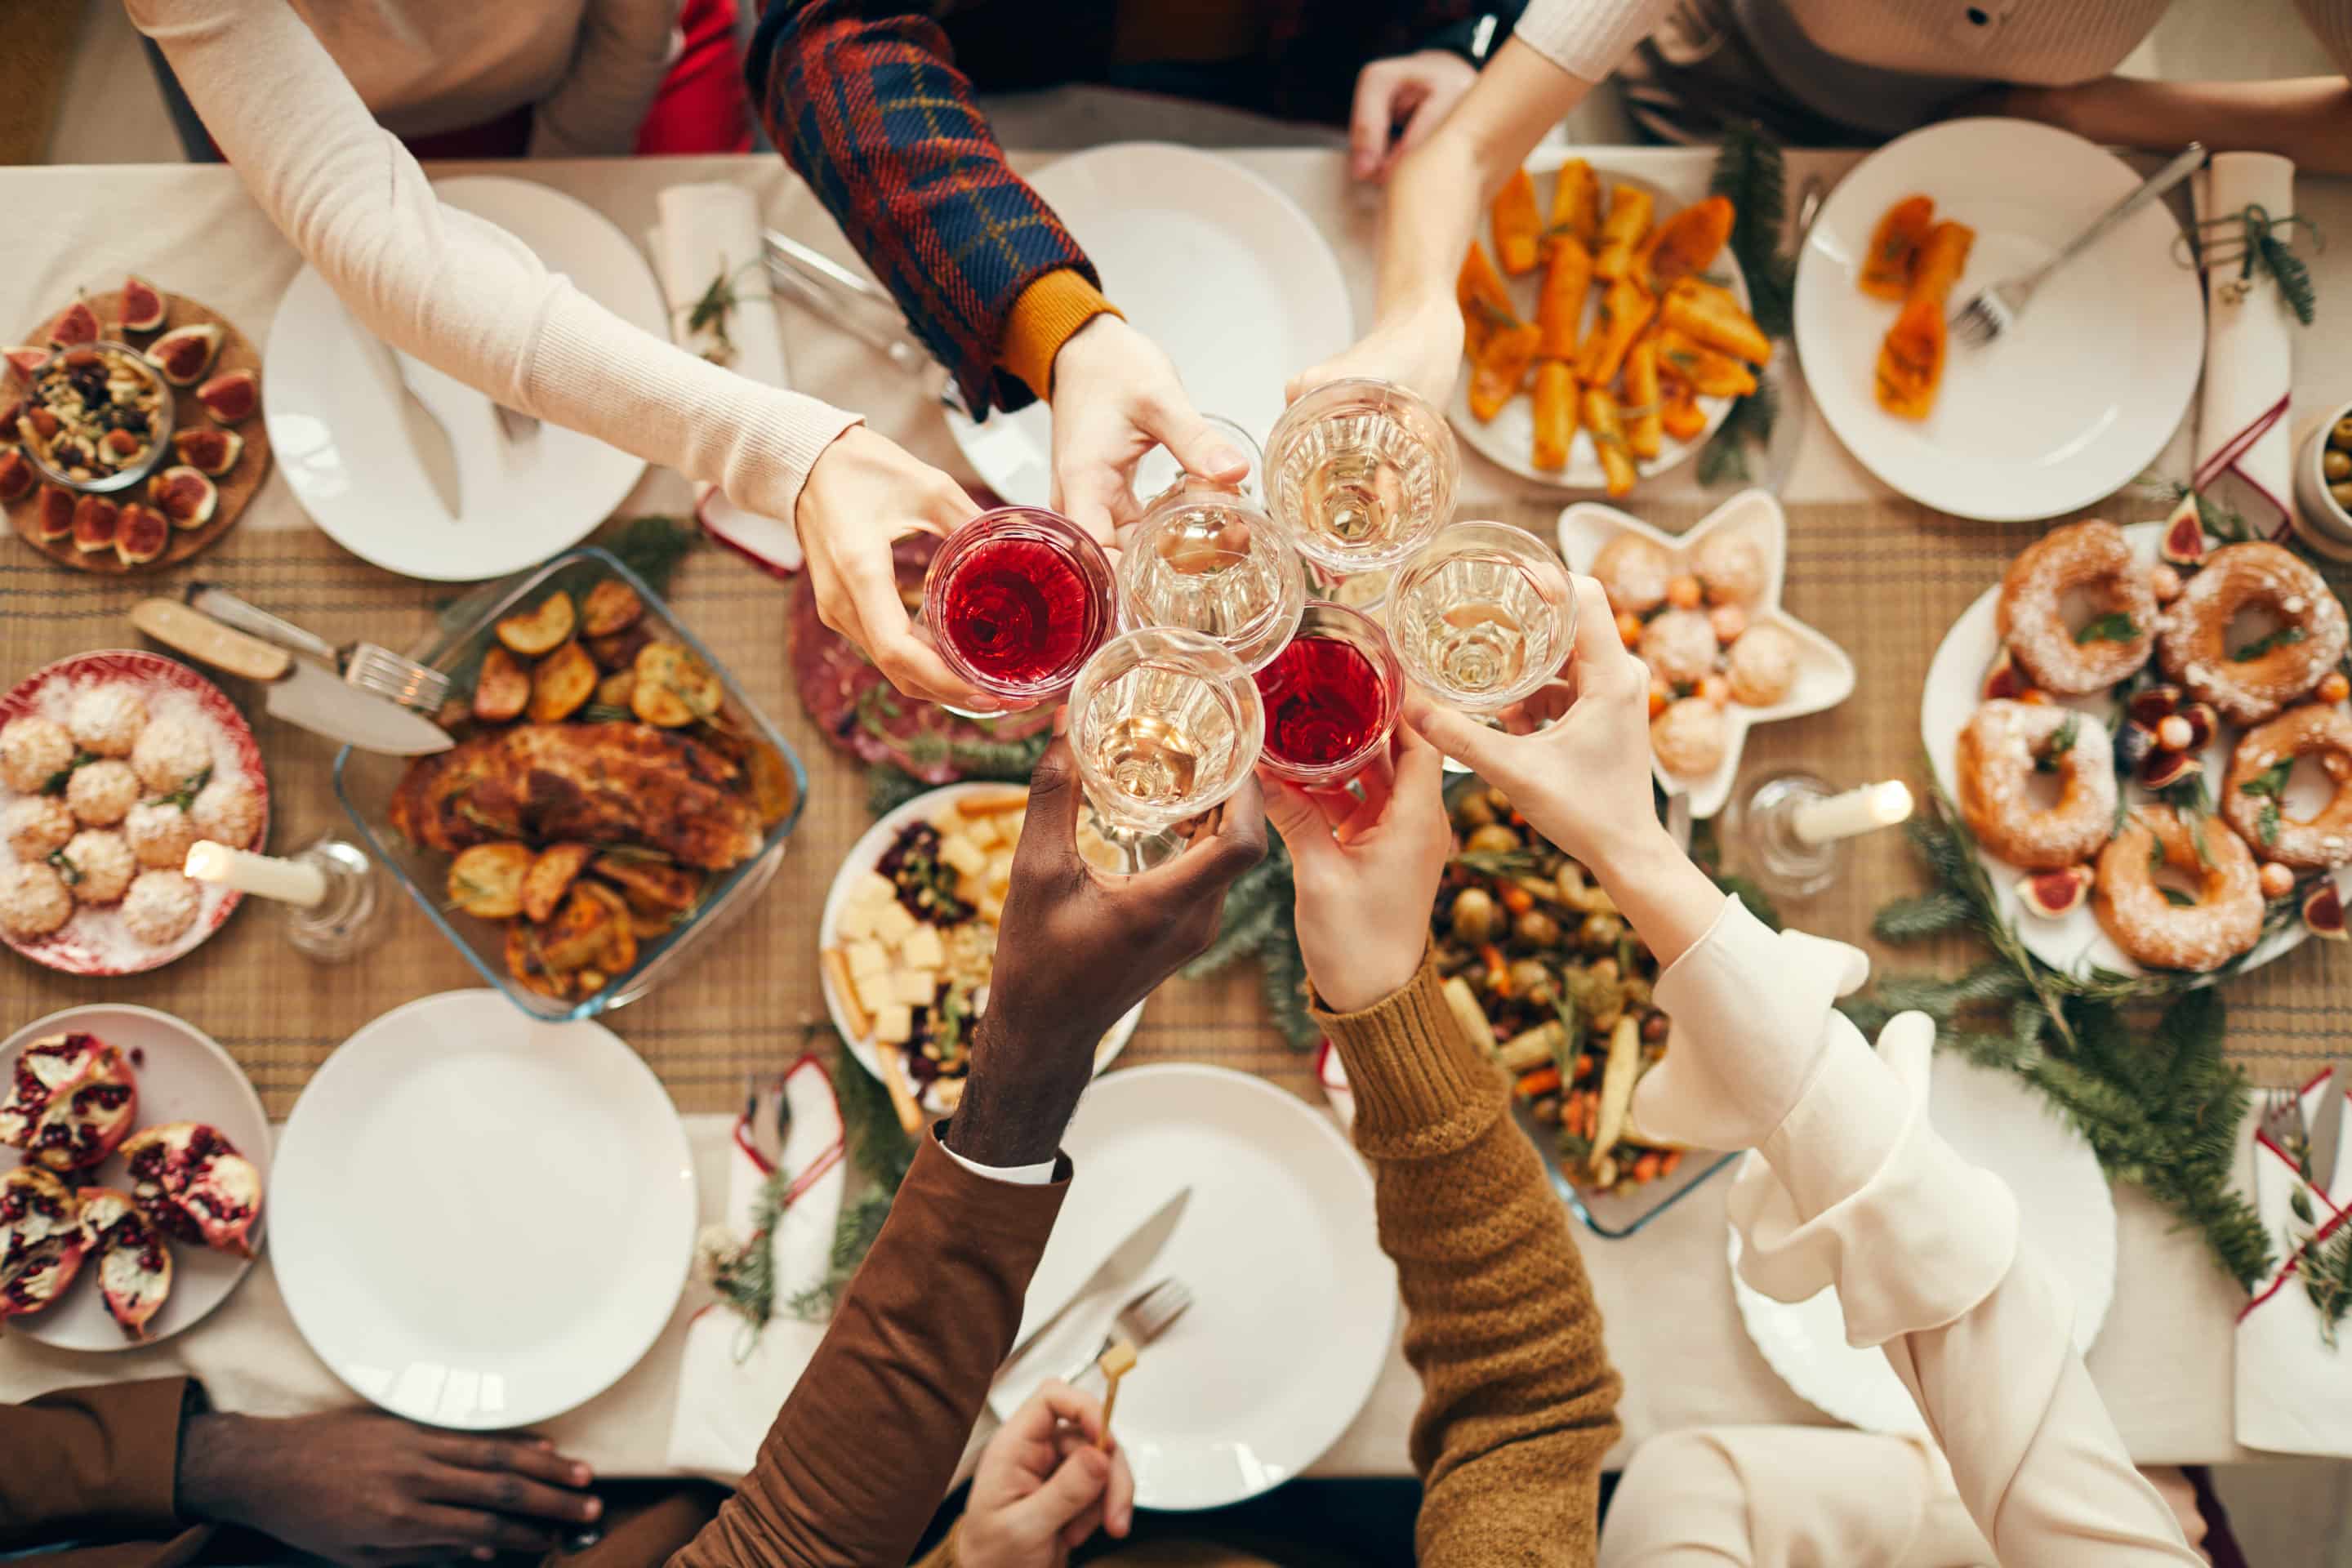 Celebration Toast over Festive Dinner Table - Keto Social Events